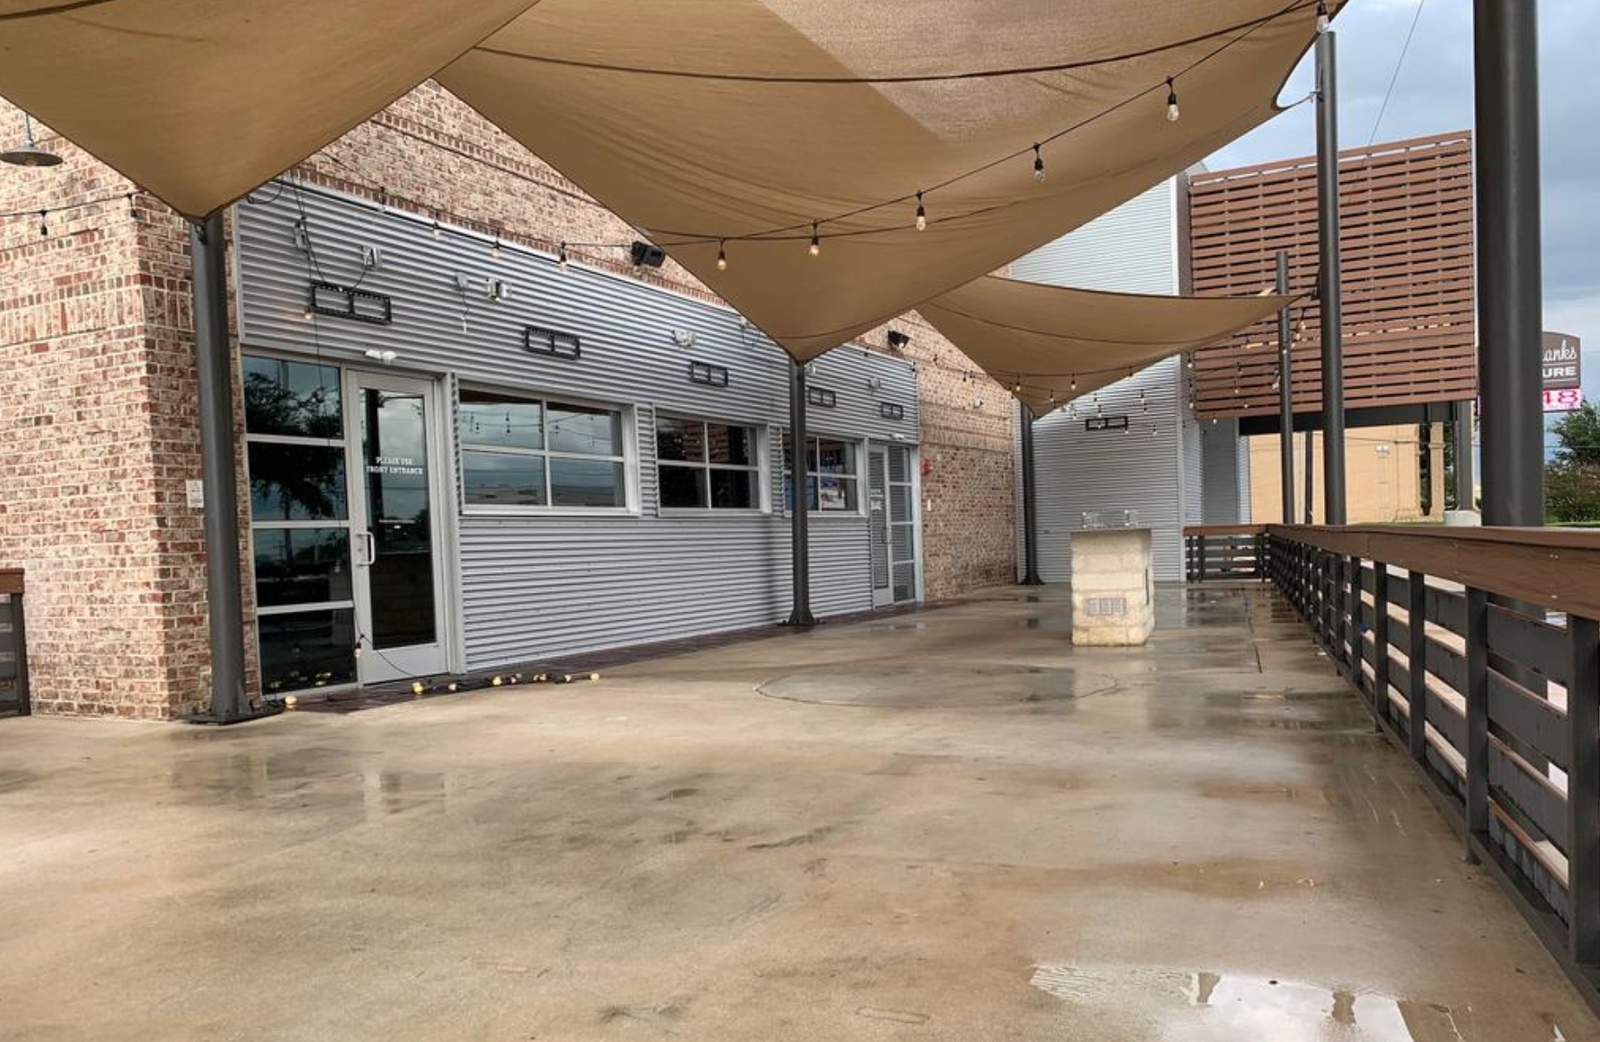 Drew Brees-owned Walk-Ons closes San Antonio restaurant